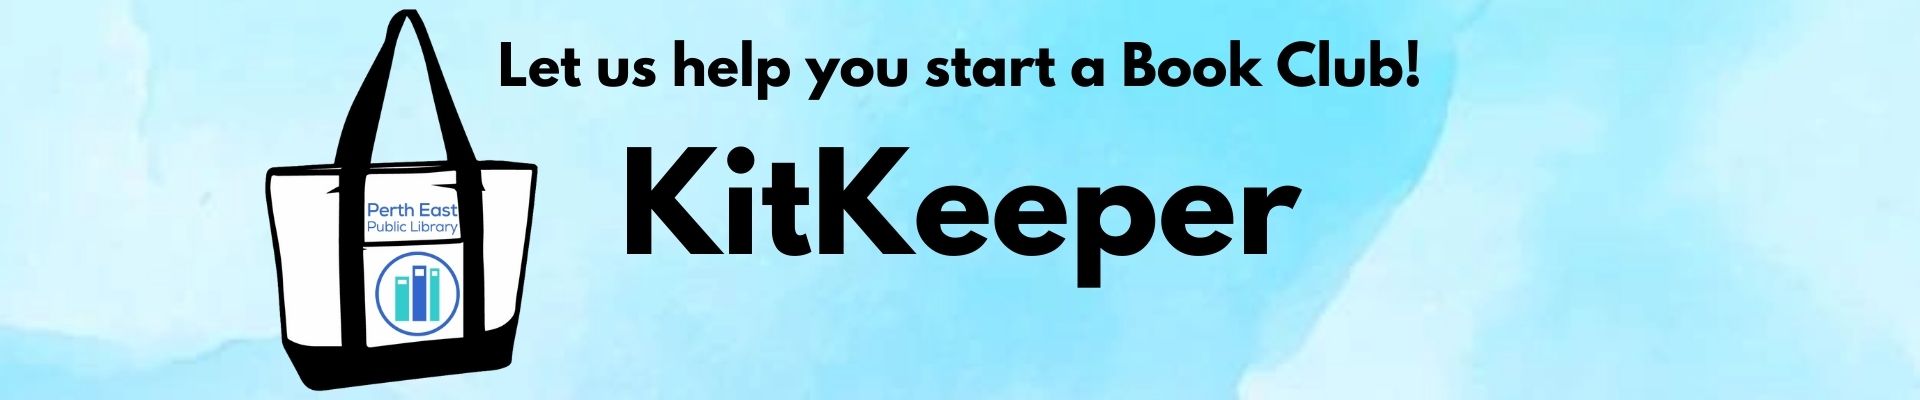 Kit keeper banner image